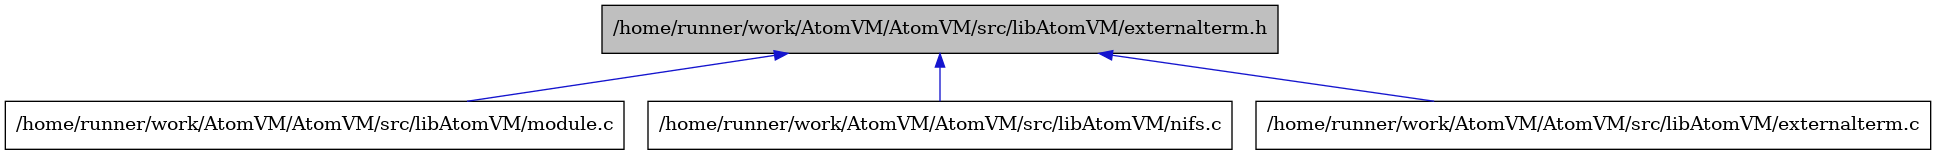 digraph {
    graph [bgcolor="#00000000"]
    node [shape=rectangle style=filled fillcolor="#FFFFFF" font=Helvetica padding=2]
    edge [color="#1414CE"]
    "3" [label="/home/runner/work/AtomVM/AtomVM/src/libAtomVM/module.c" tooltip="/home/runner/work/AtomVM/AtomVM/src/libAtomVM/module.c"]
    "4" [label="/home/runner/work/AtomVM/AtomVM/src/libAtomVM/nifs.c" tooltip="/home/runner/work/AtomVM/AtomVM/src/libAtomVM/nifs.c"]
    "2" [label="/home/runner/work/AtomVM/AtomVM/src/libAtomVM/externalterm.c" tooltip="/home/runner/work/AtomVM/AtomVM/src/libAtomVM/externalterm.c"]
    "1" [label="/home/runner/work/AtomVM/AtomVM/src/libAtomVM/externalterm.h" tooltip="/home/runner/work/AtomVM/AtomVM/src/libAtomVM/externalterm.h" fillcolor="#BFBFBF"]
    "1" -> "2" [dir=back tooltip="include"]
    "1" -> "3" [dir=back tooltip="include"]
    "1" -> "4" [dir=back tooltip="include"]
}